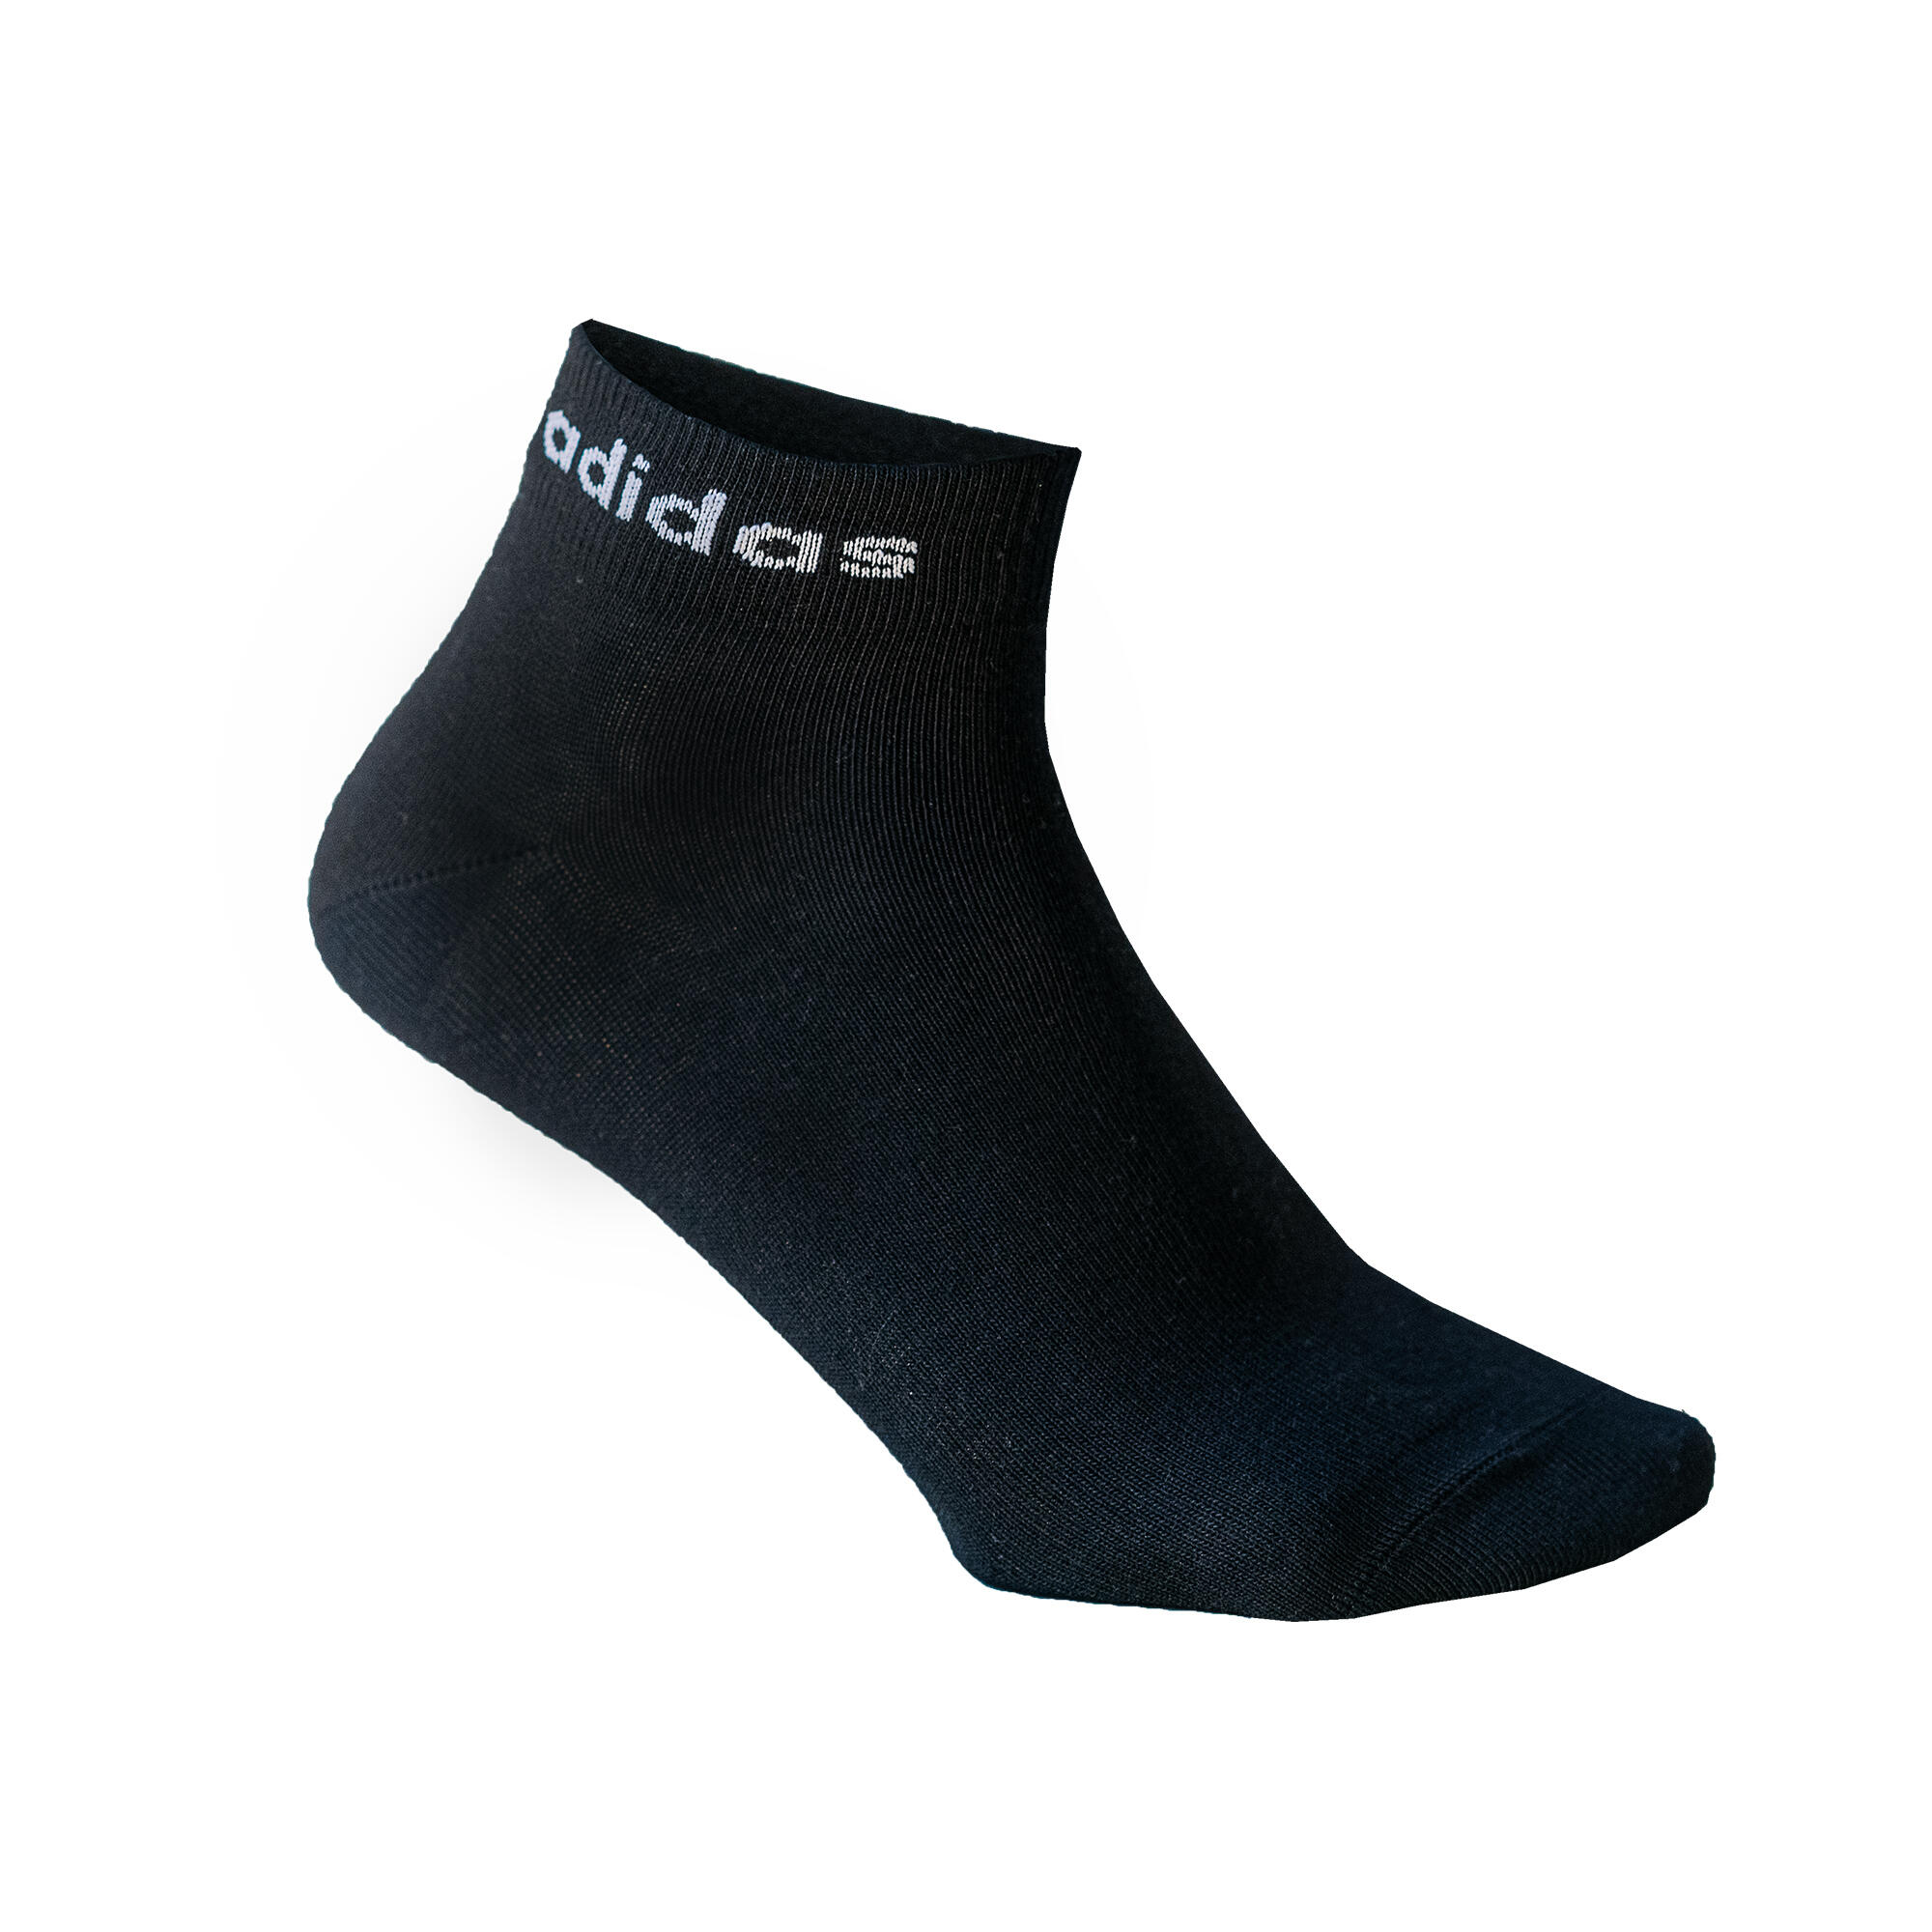 Mid Sports Socks Tri-Pack - Black/White/Grey 3/8